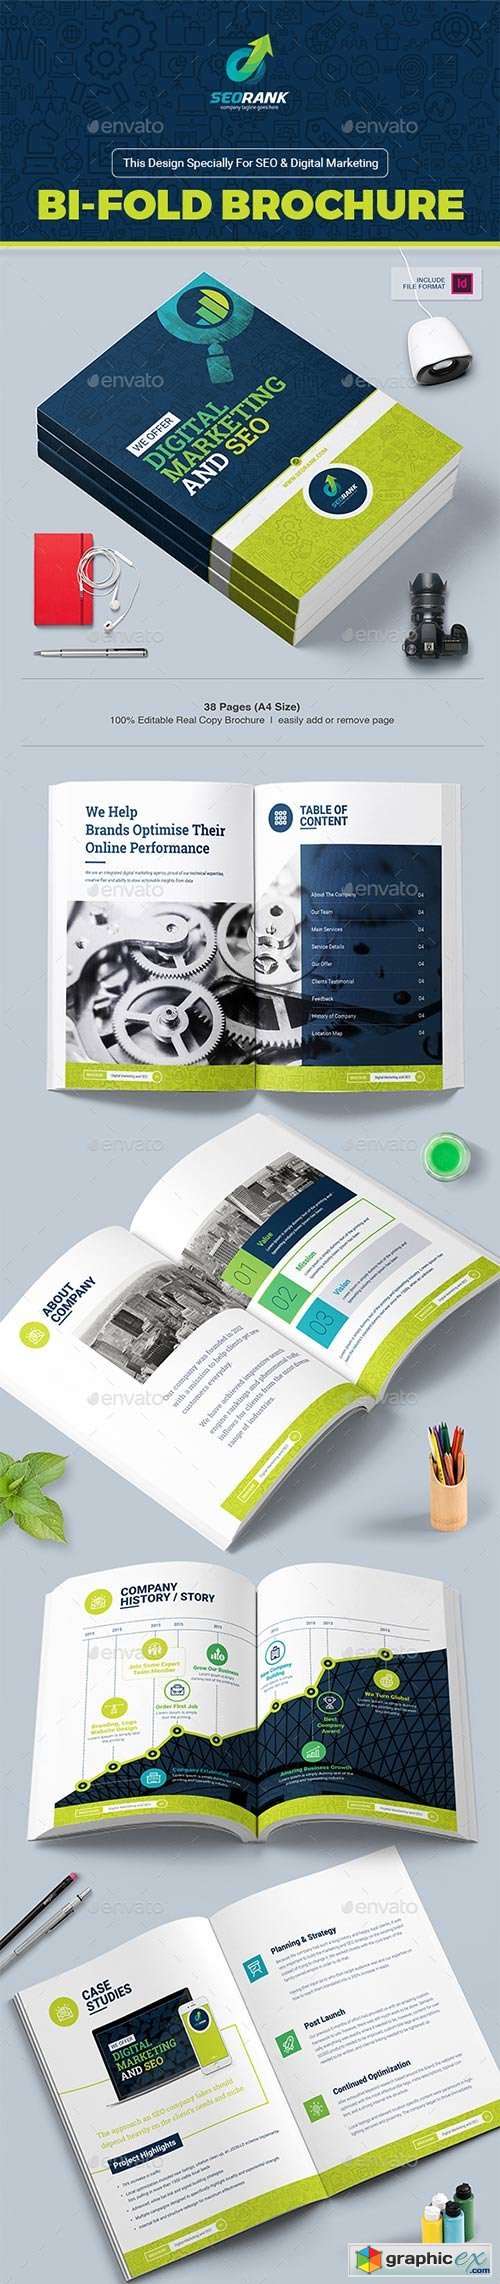 Bi-Fold Brochure Template for SEO (Search Engine Optimization) & Digital Marketing Agency / Company